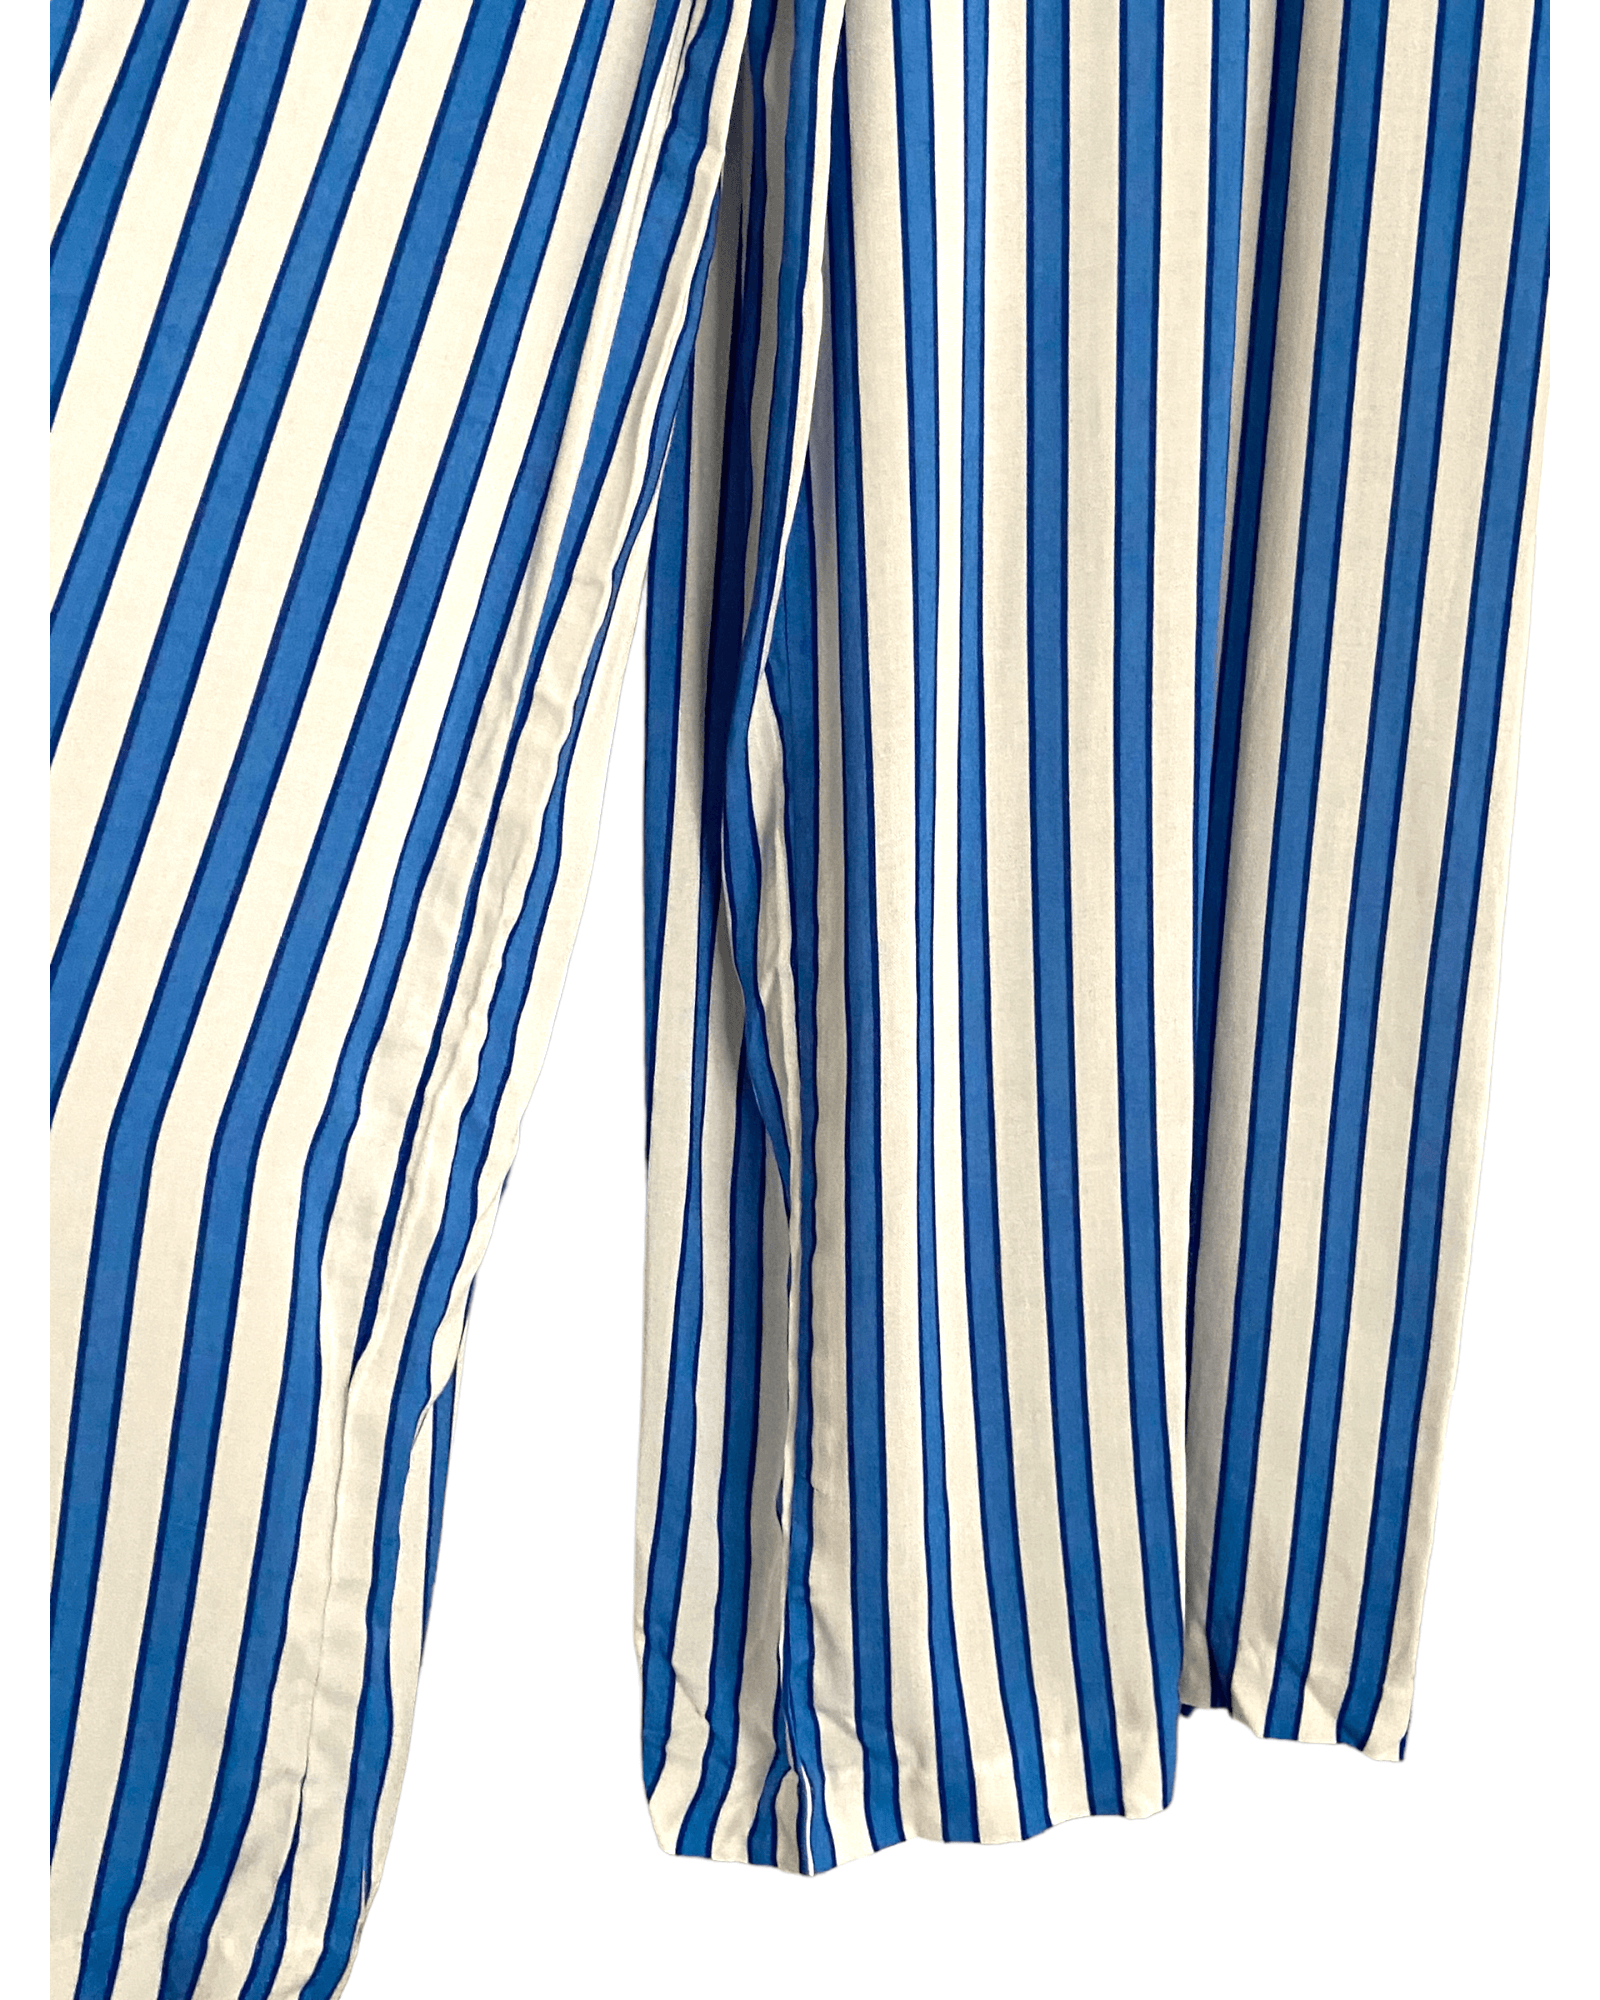 High Waist Striped Wide Leg Pants | Wide leg pants outfit, Striped wide leg  pants, Striped wide leg trousers